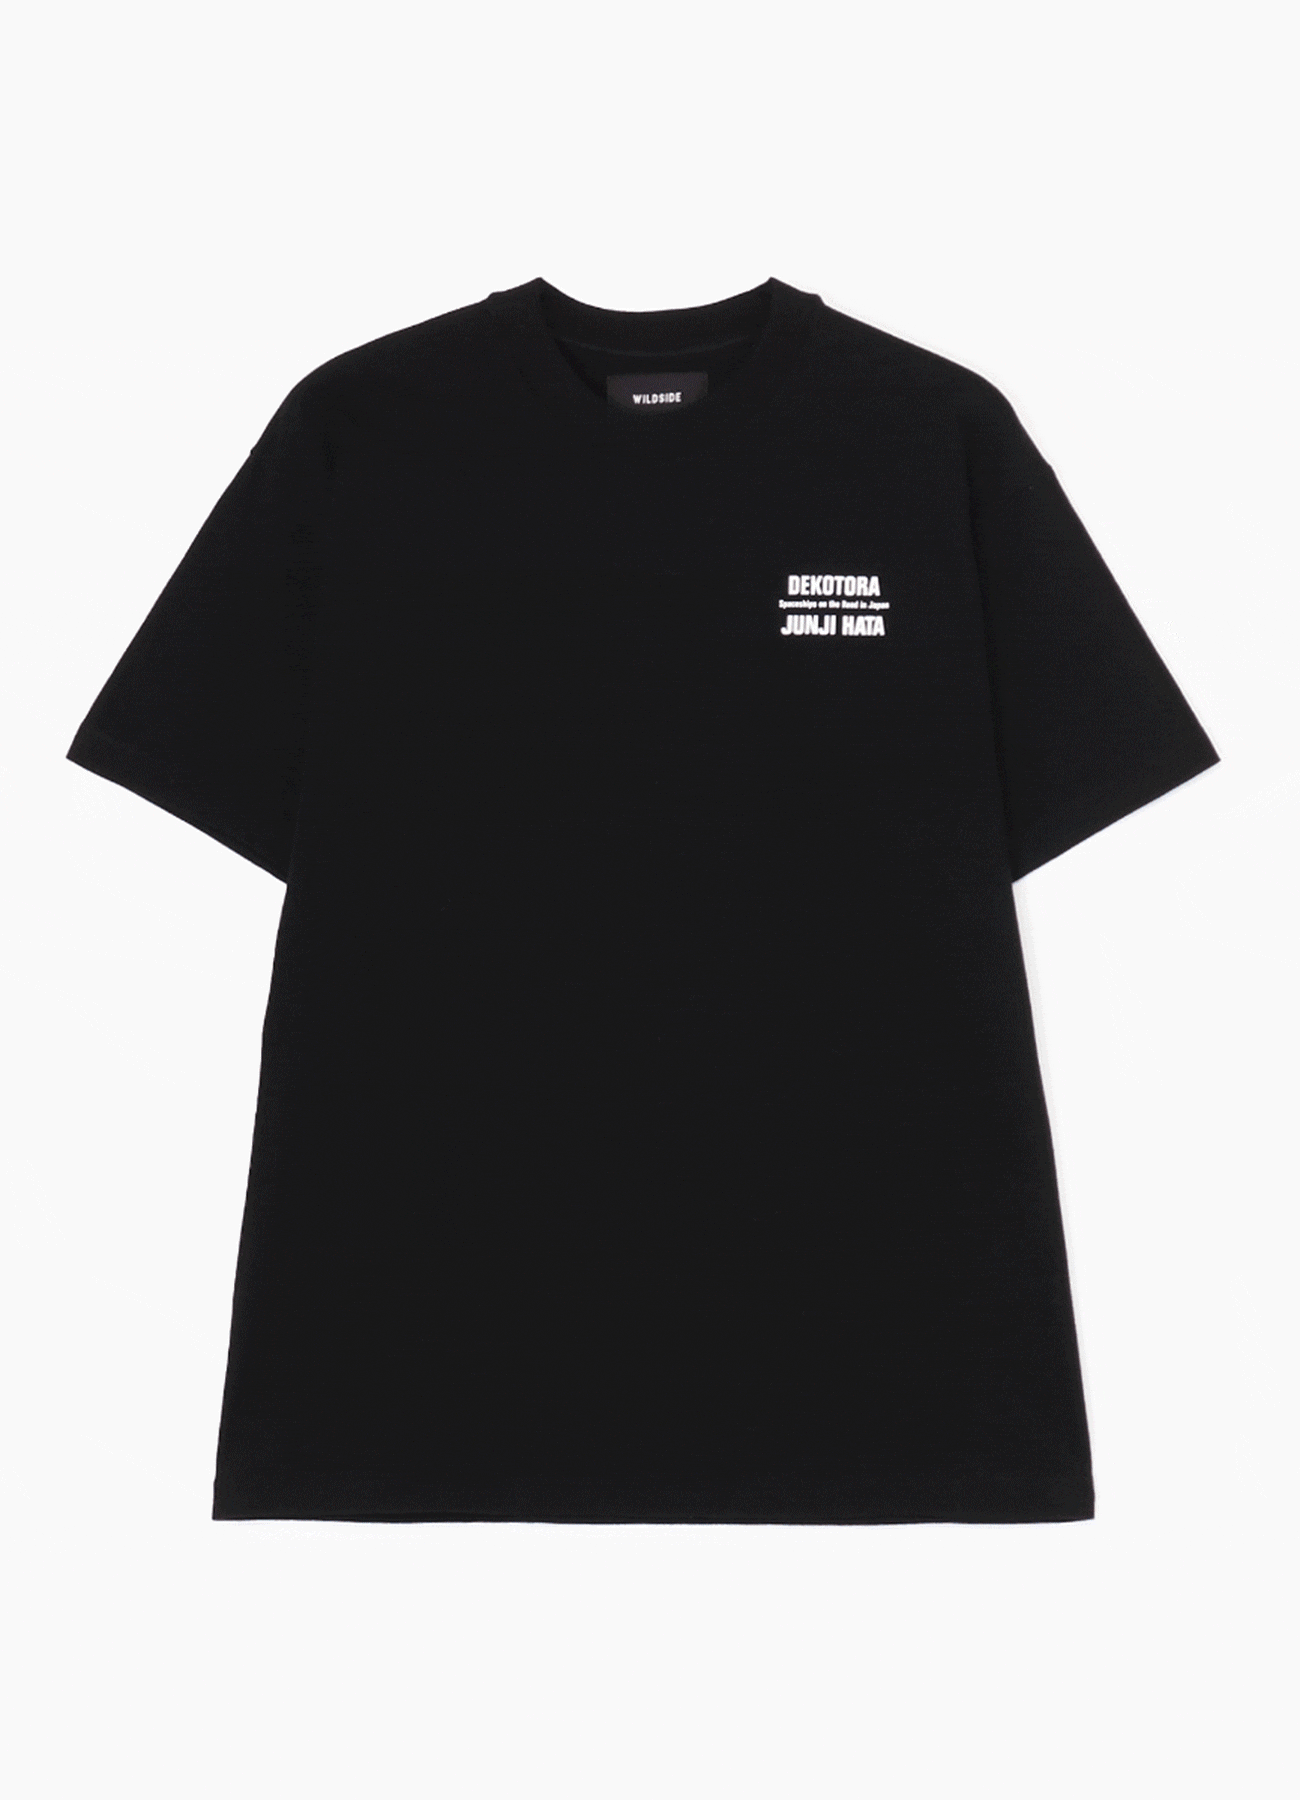 WILDSIDE × POGGYTHEMAN × DEKOTORA Short Sleeve T-shirt (Truck)